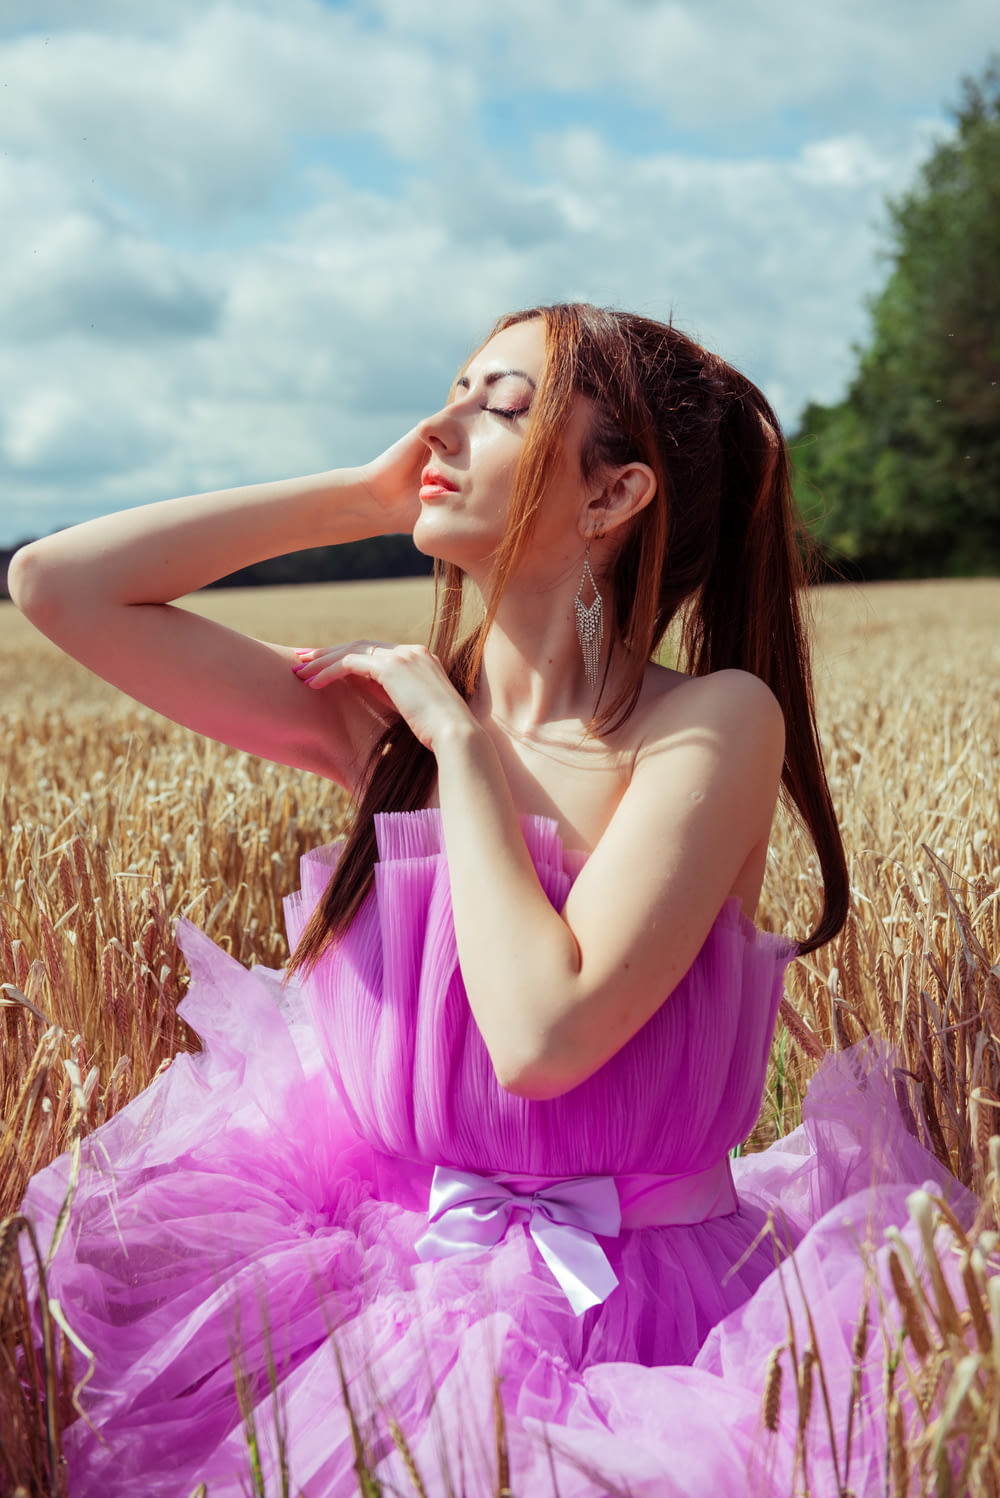 a woman in a pink dress sitting in a wheat field